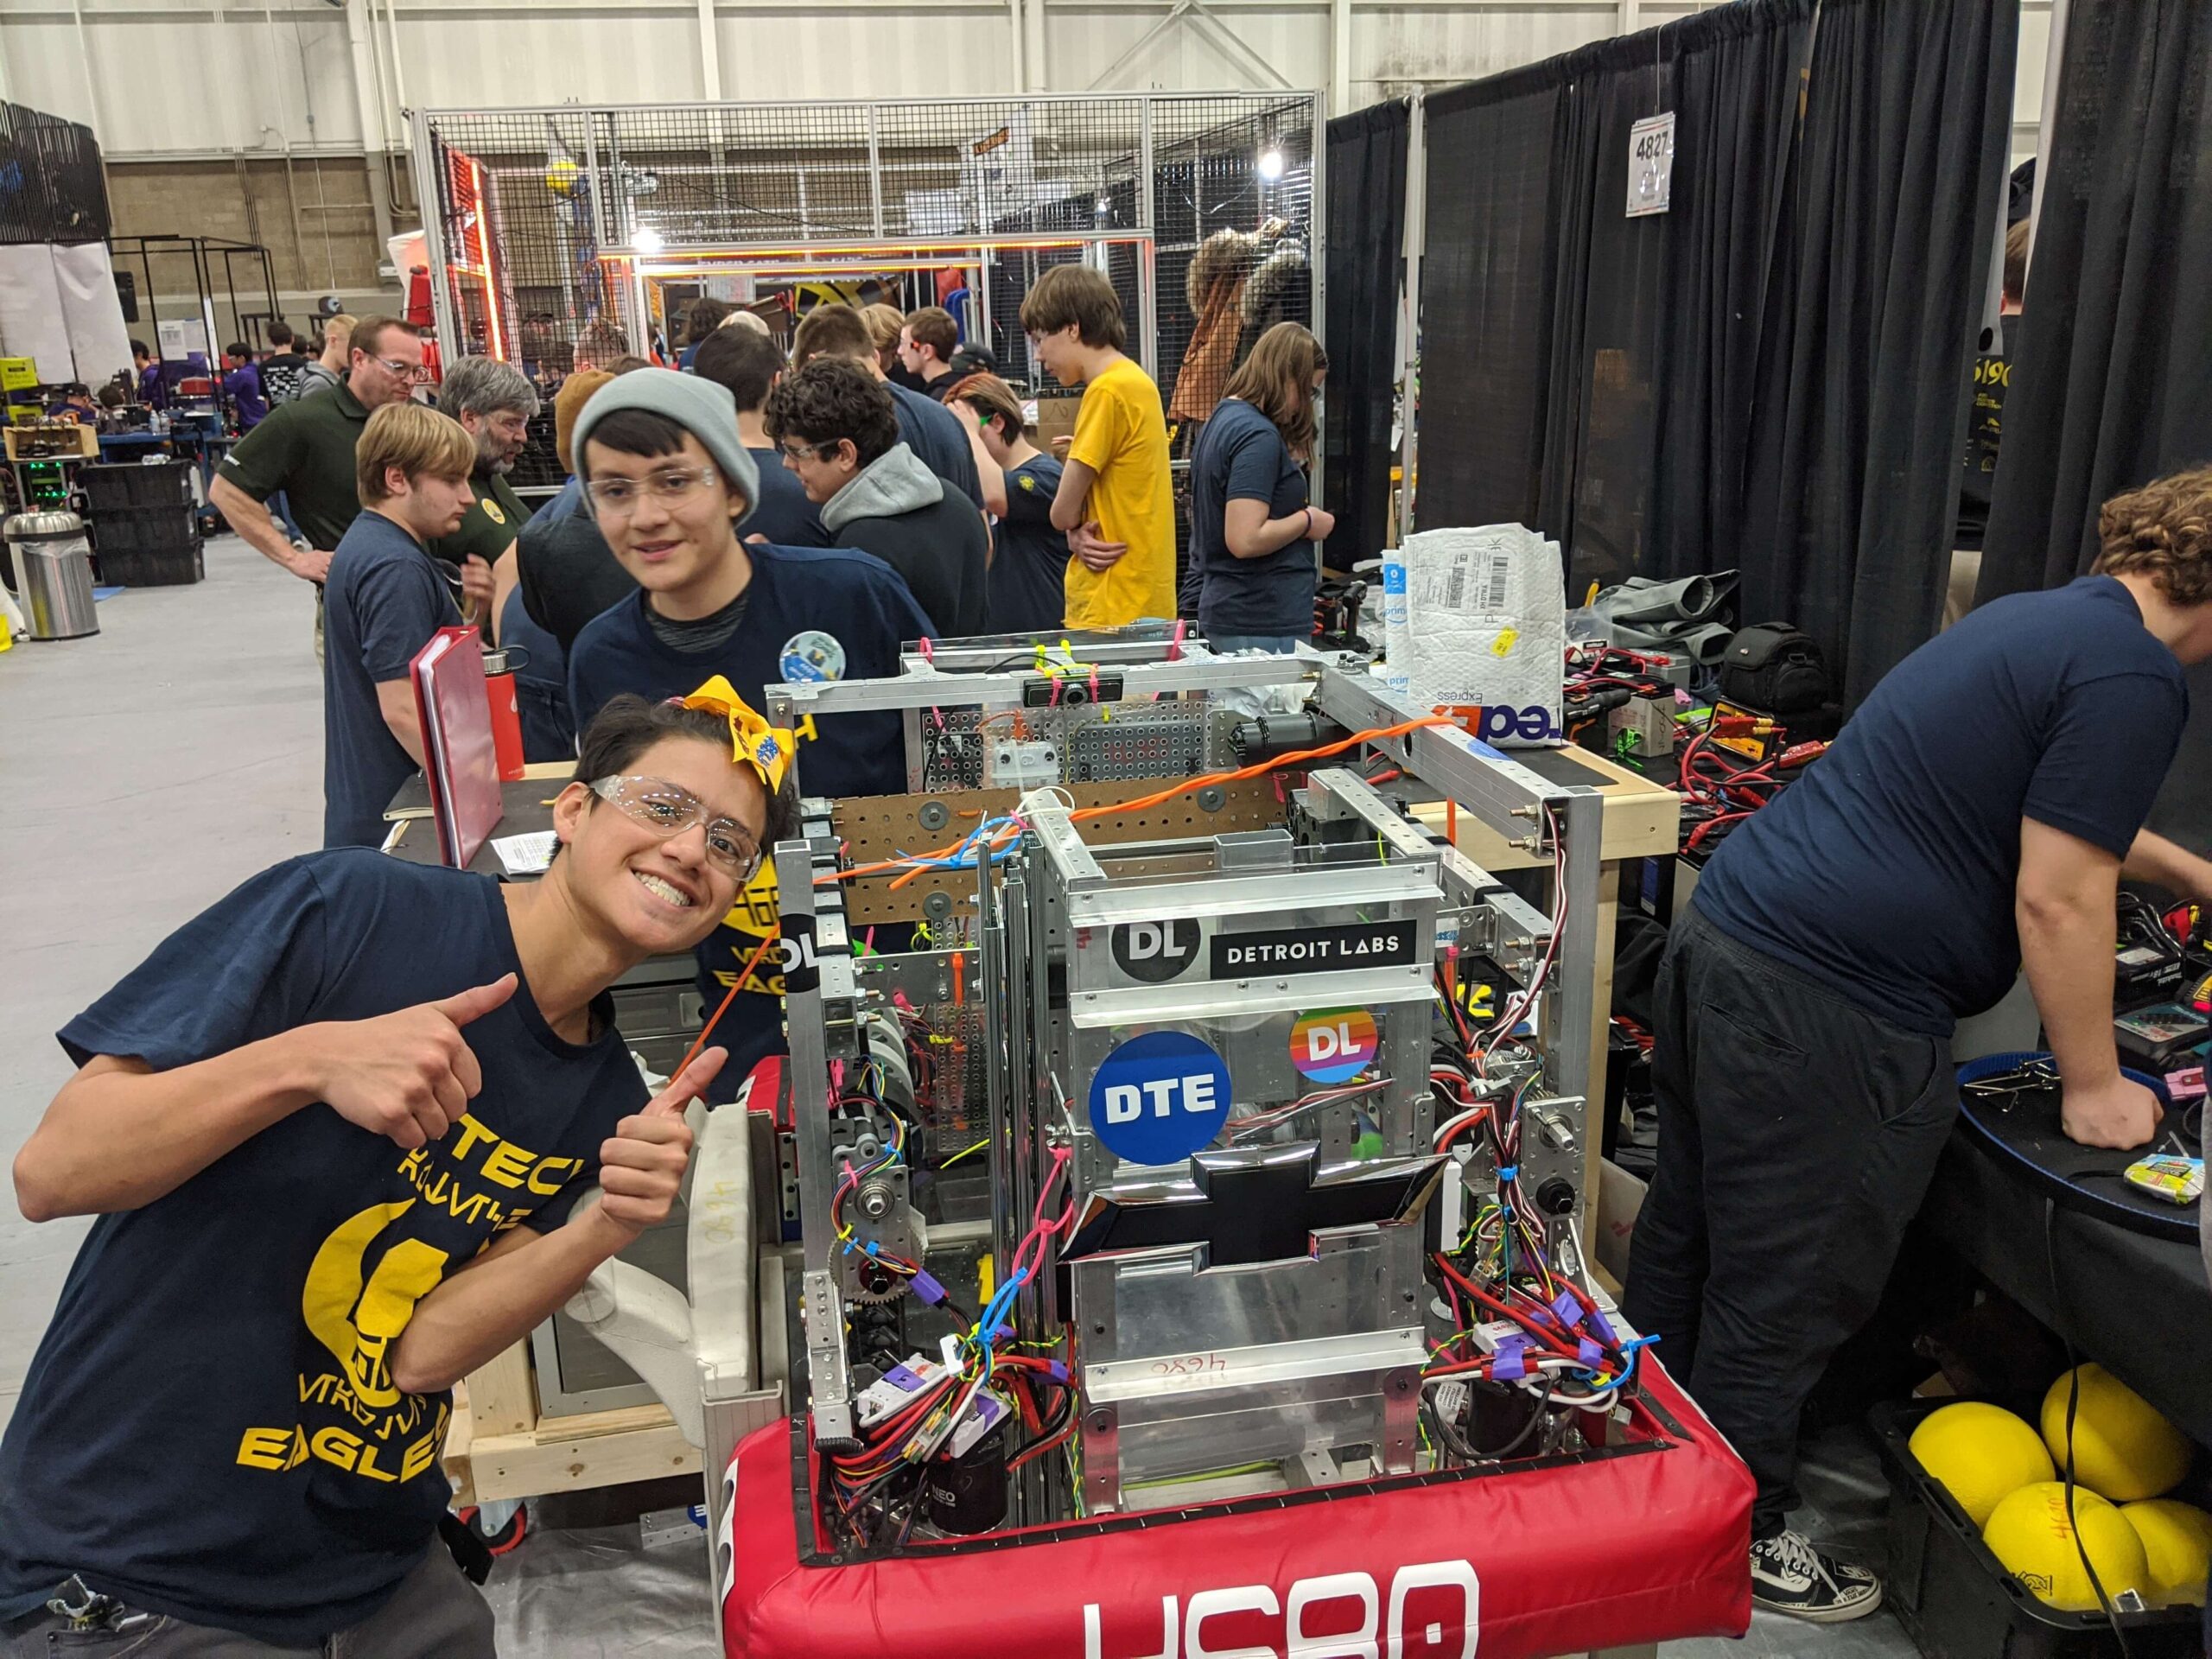 Robotics team posing for a photo at a college fair